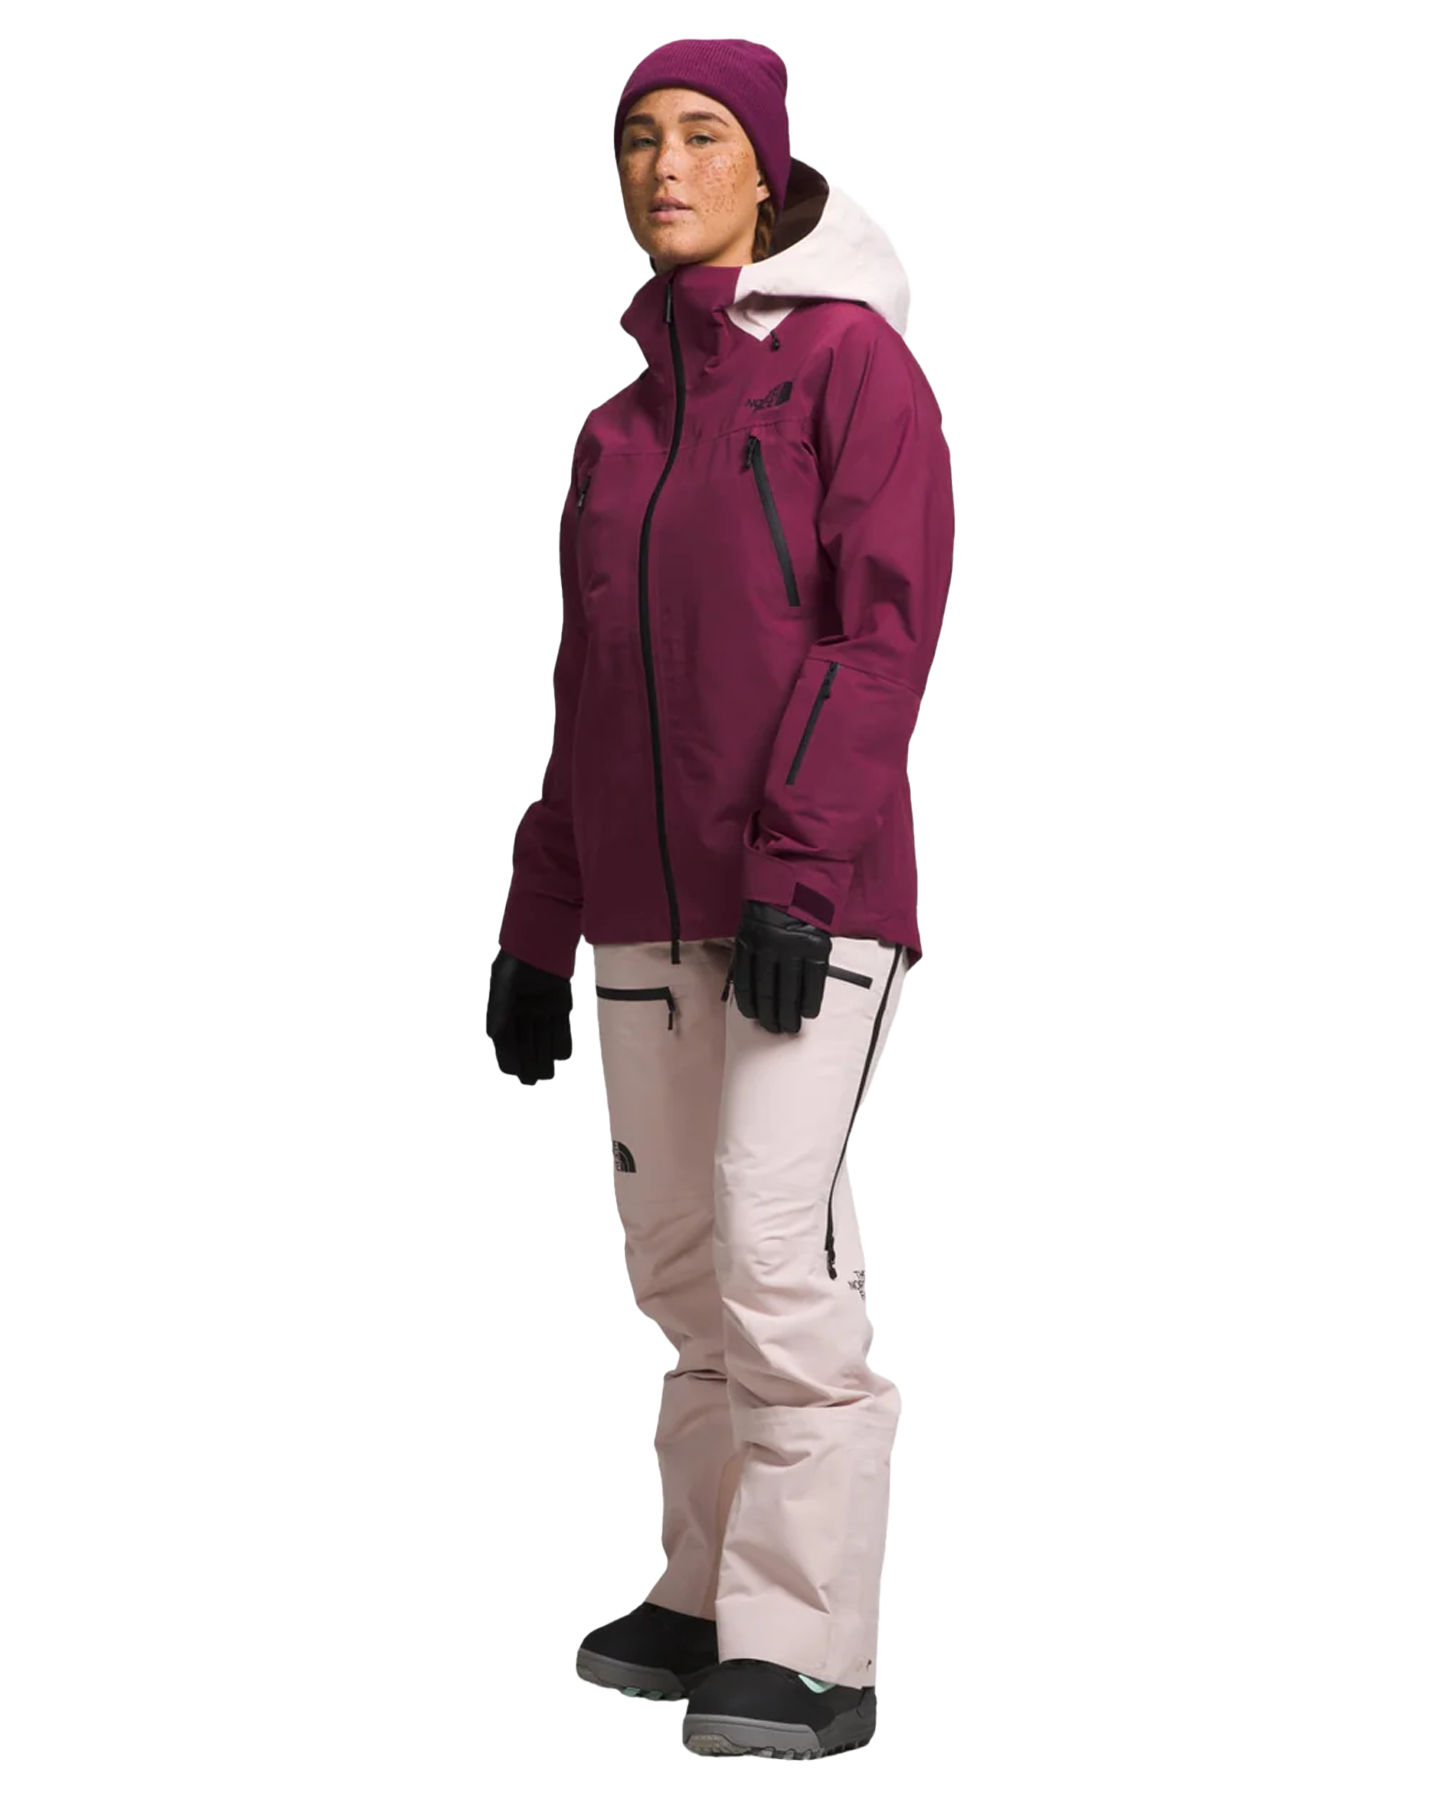 The North Face Women's Ceptor Snow Jacket - Boysenberry Women's Snow Jackets - Trojan Wake Ski Snow